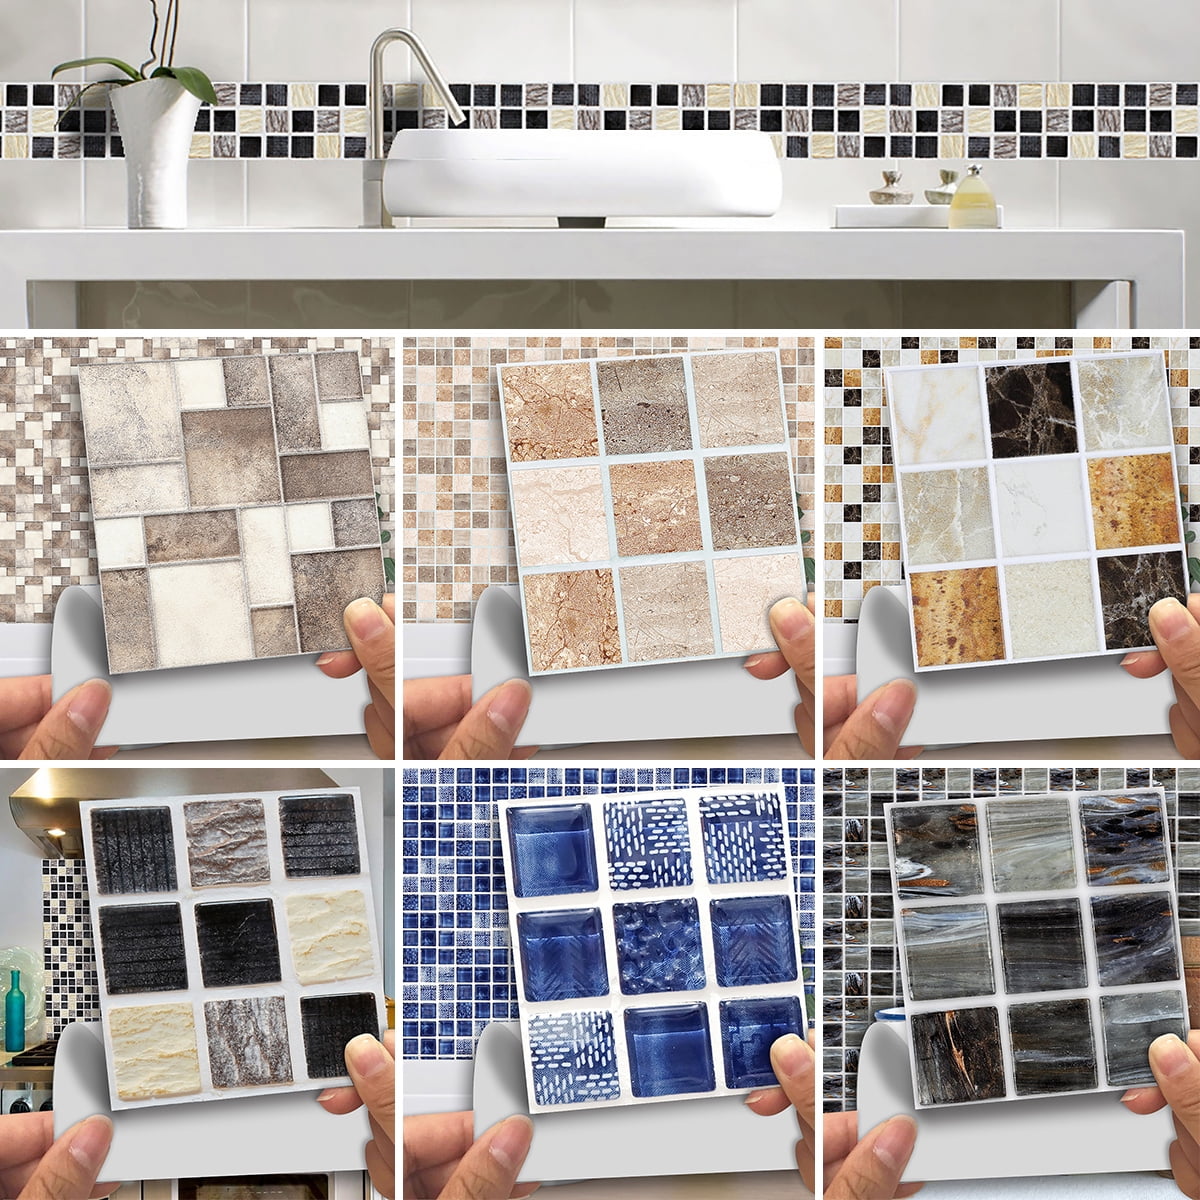 DIY Mosaic 3D Self Adhesive Wall Tile Sticker Vinyl Bathroom Kitchen Home Decor 